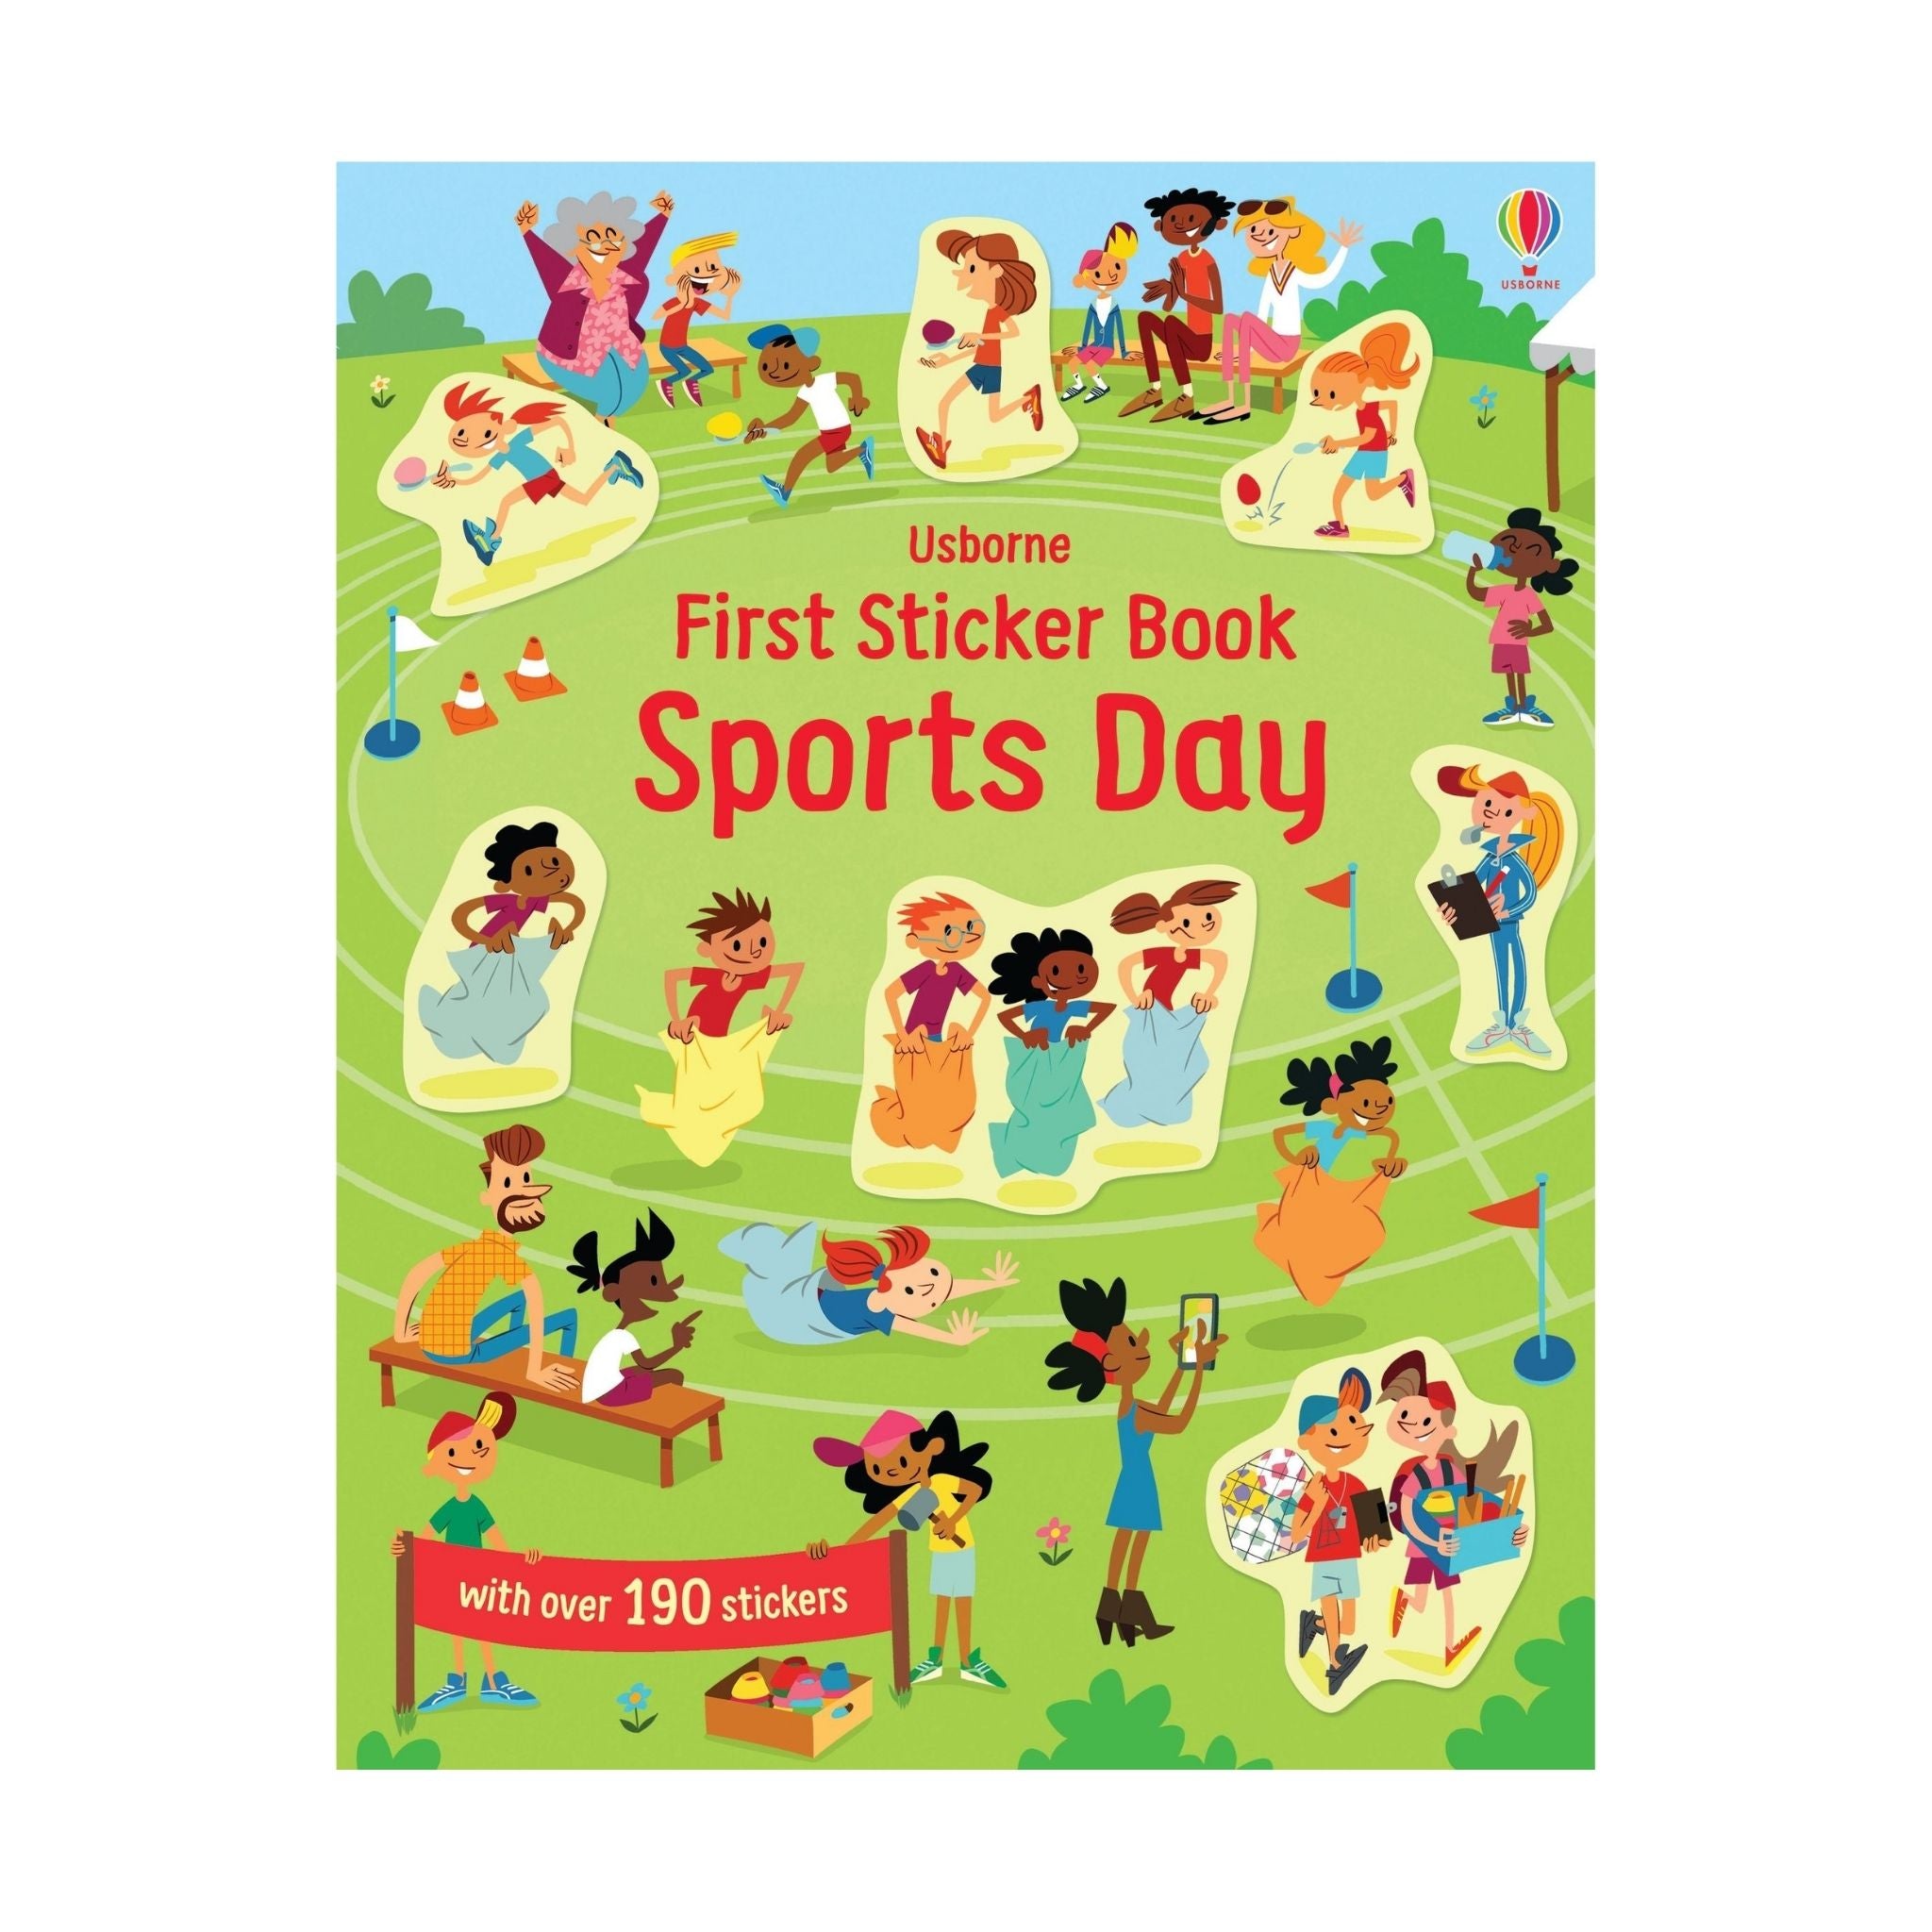 First Sticker Book Sports Day